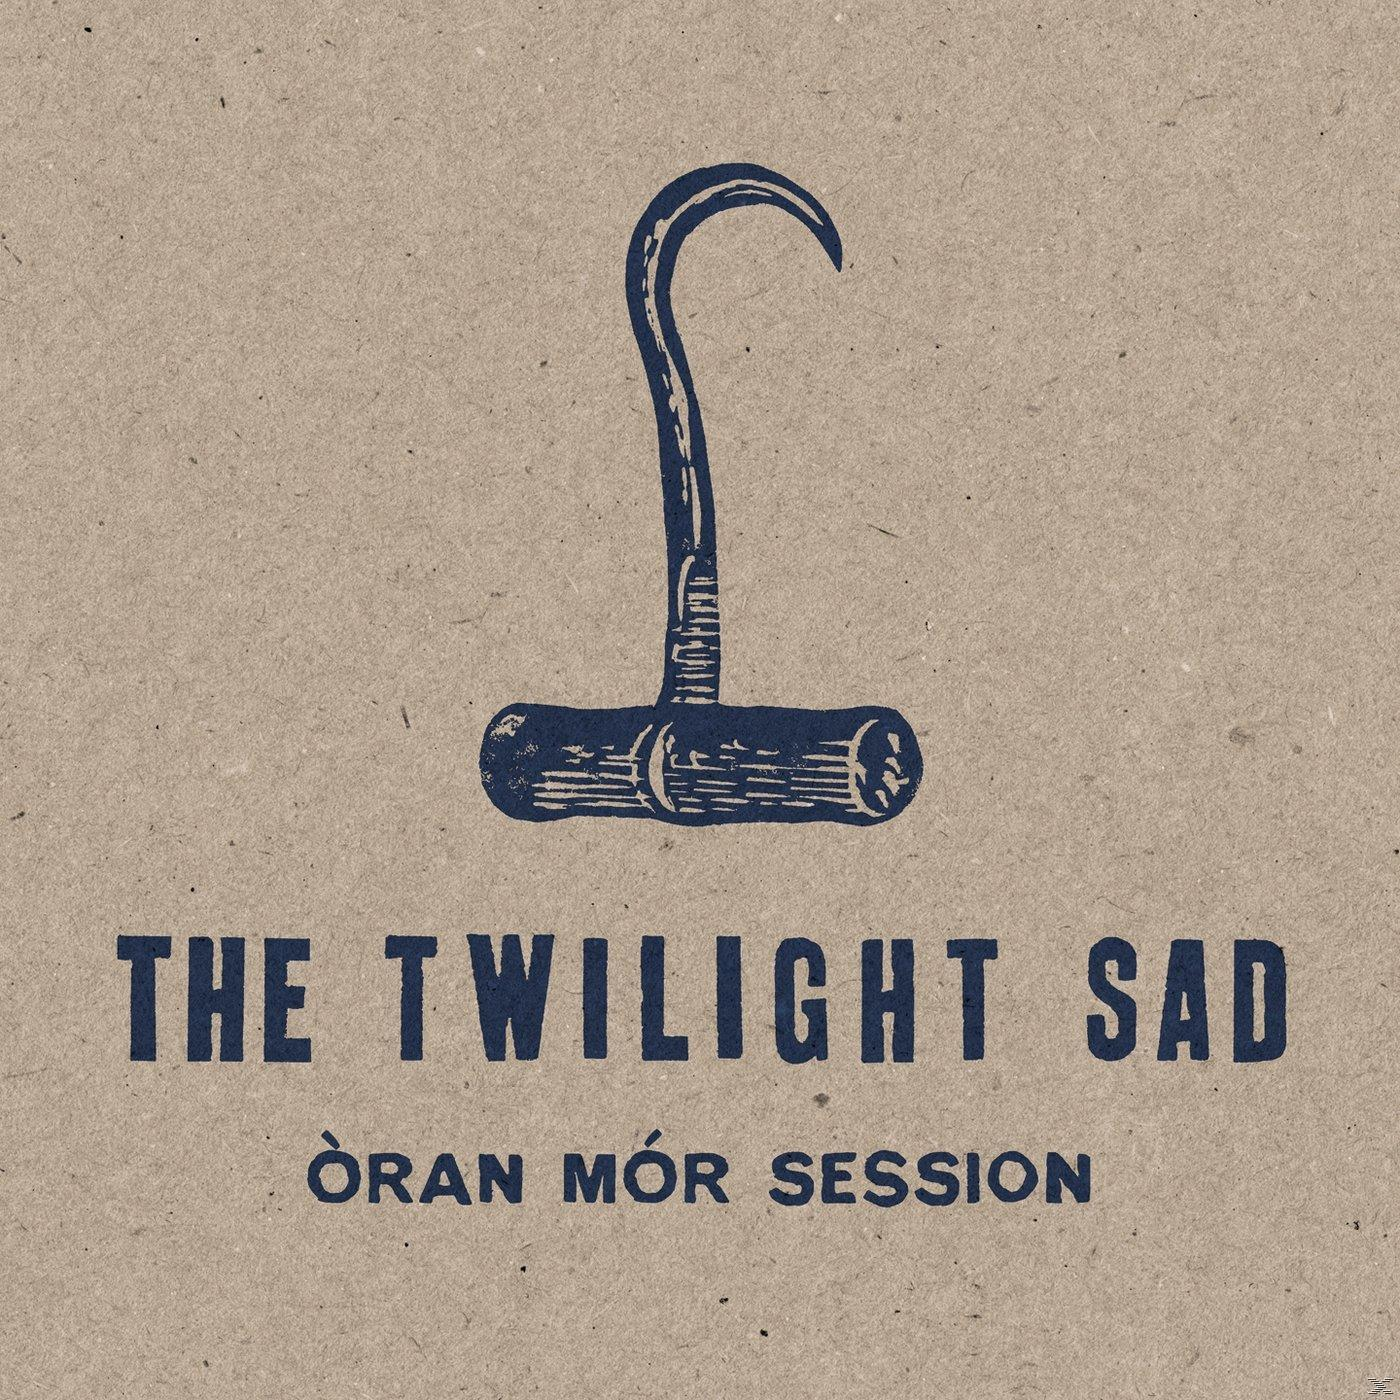 The Òran (Vinyl) - - Twilight (Lp) Sad Mór